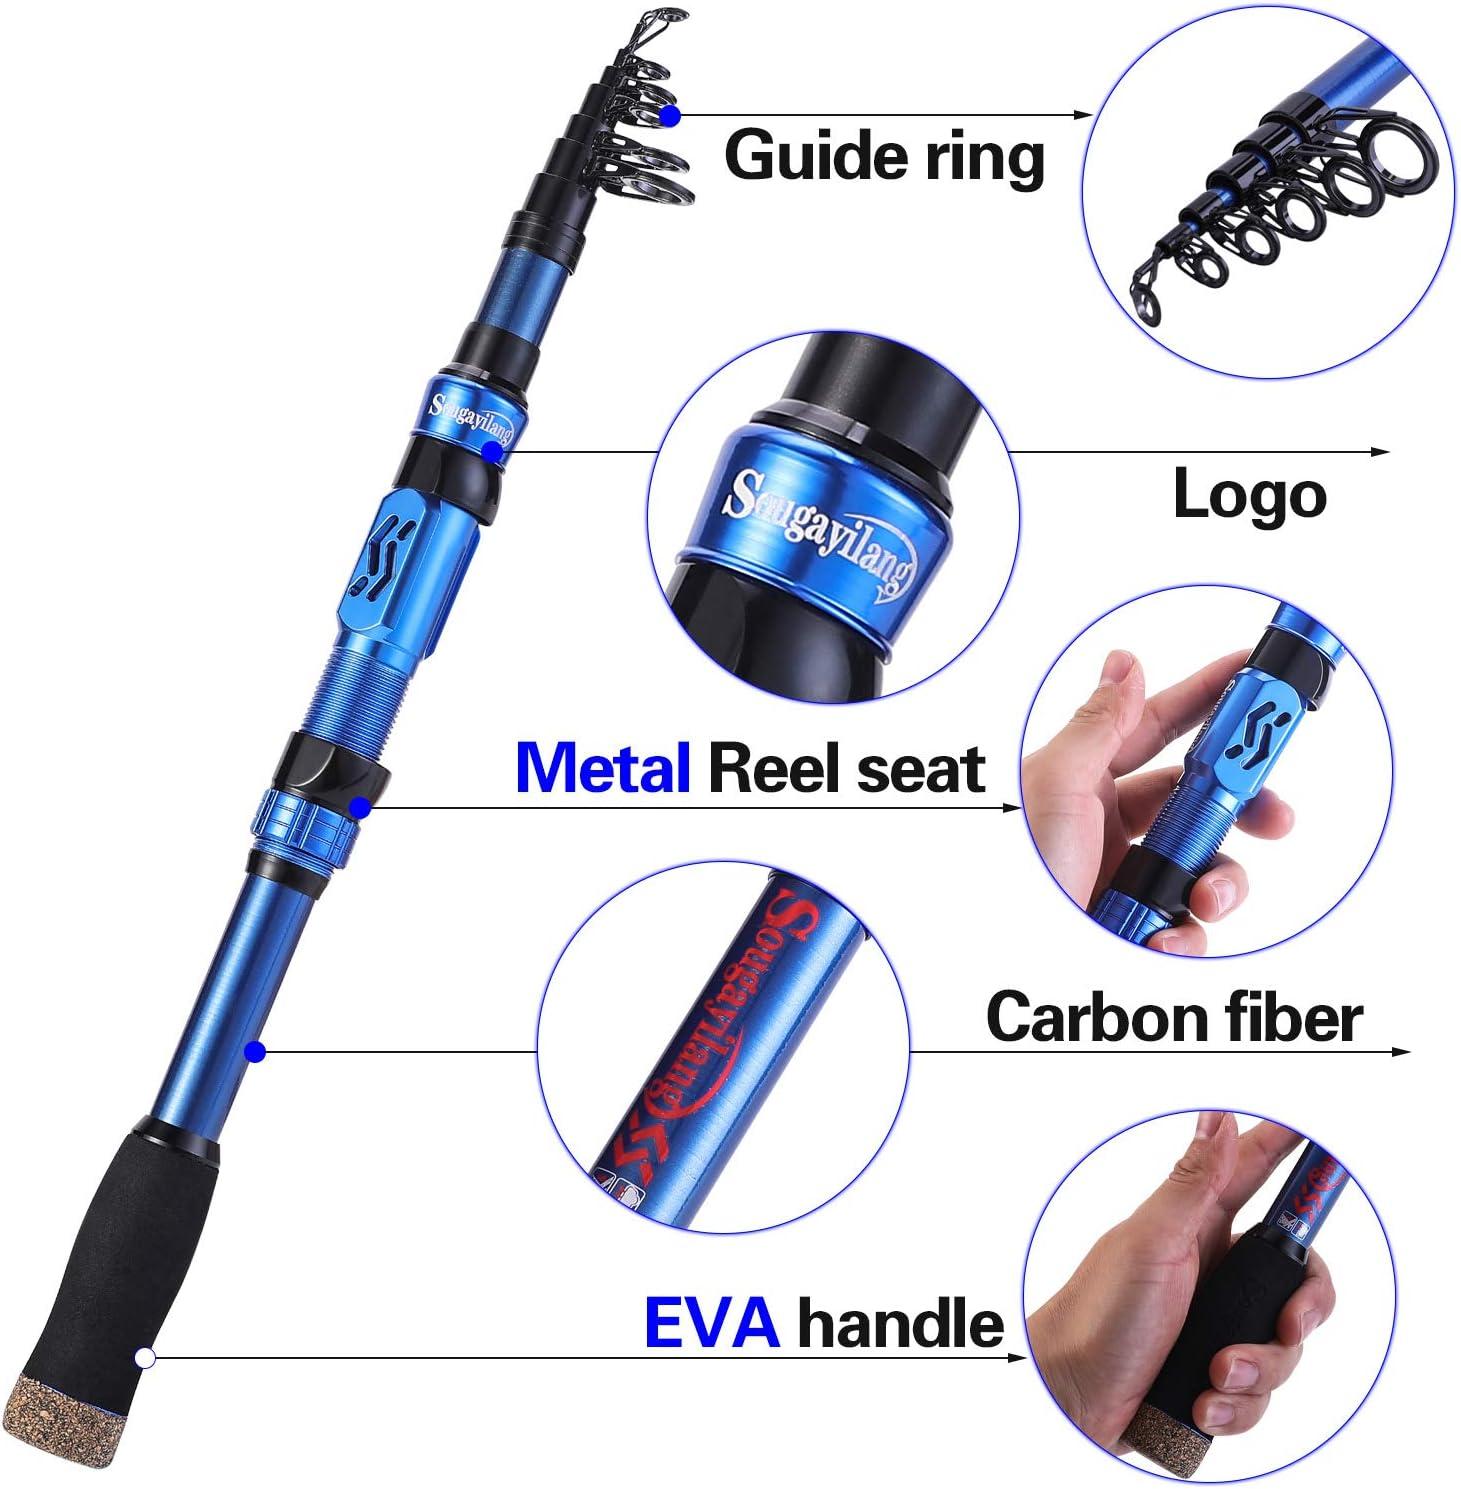 Sougayilang Telescopic Fishing Rod - 24 Ton Carbon Fiber